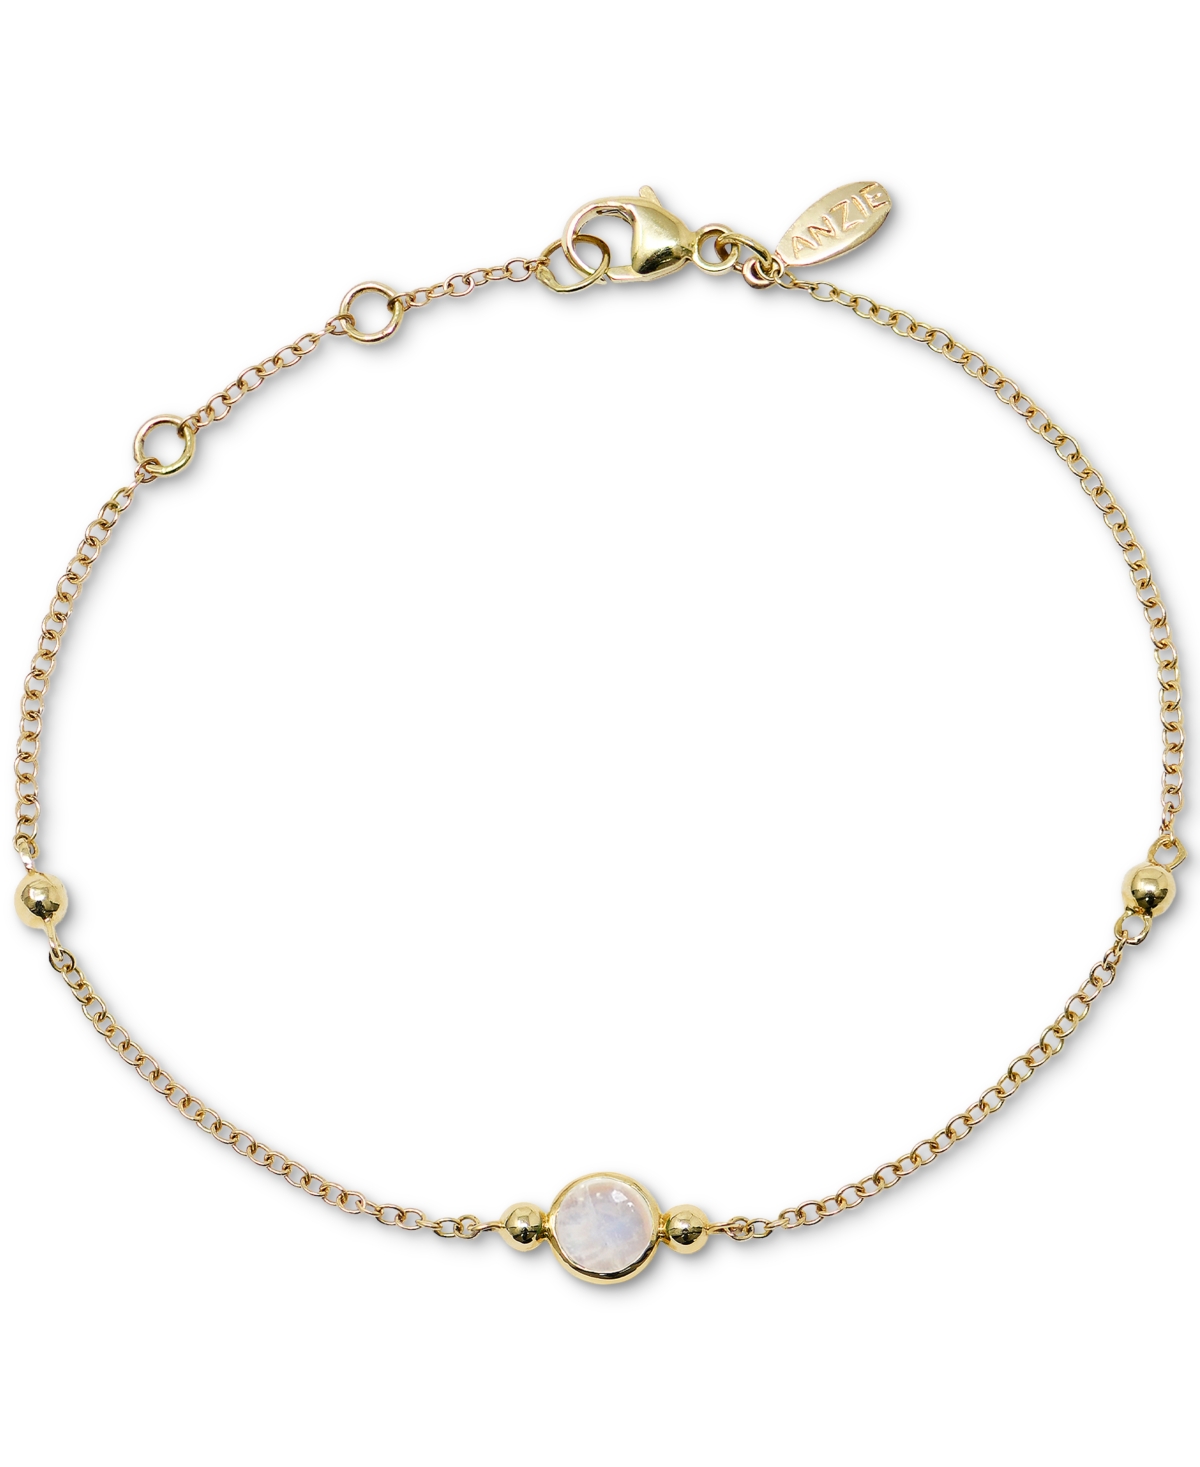 Moonstone & Polished Bead Link Bracelet in 14k Gold - Rainbow Moonstone